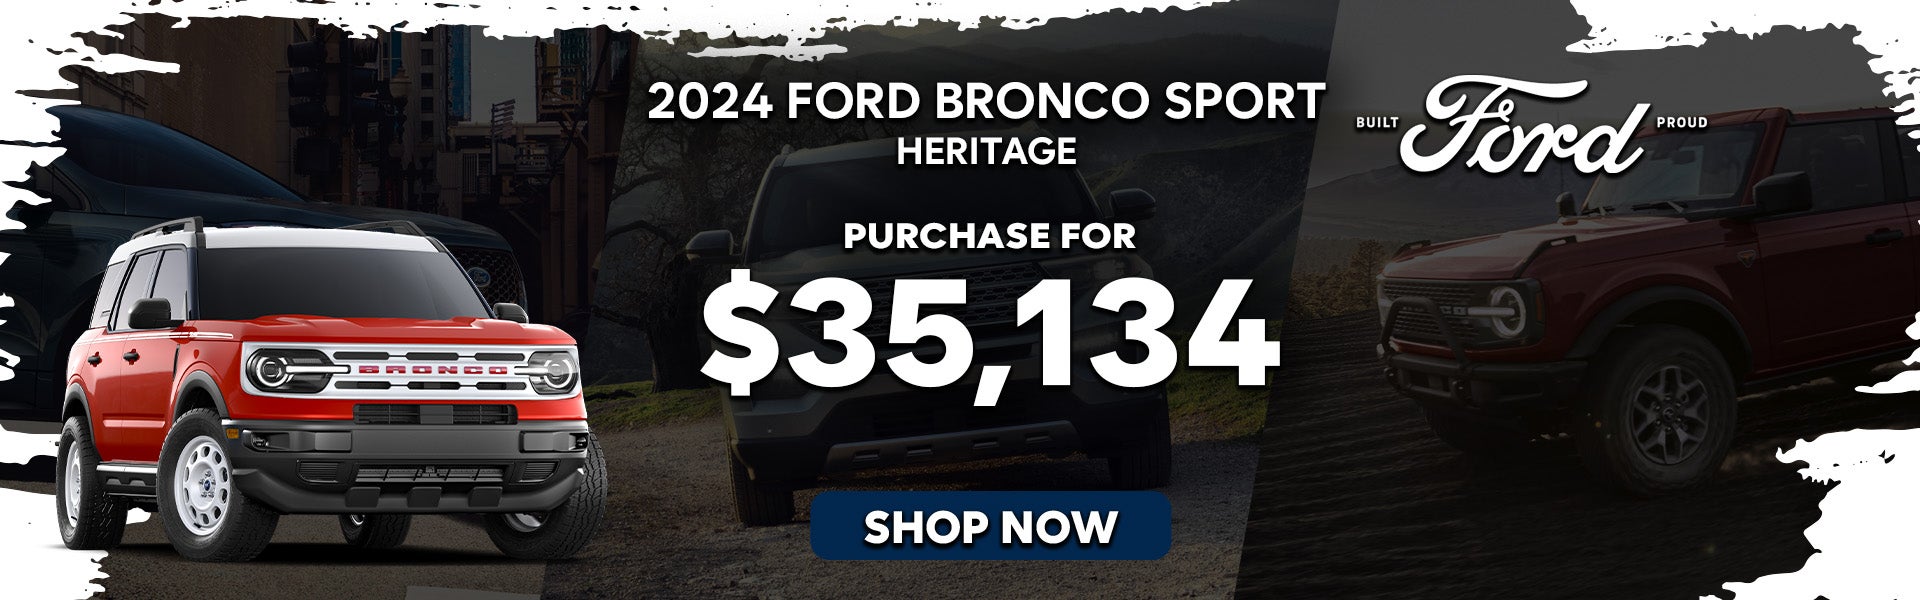 2024 Ford Bronco Sport Heritage Special Offer